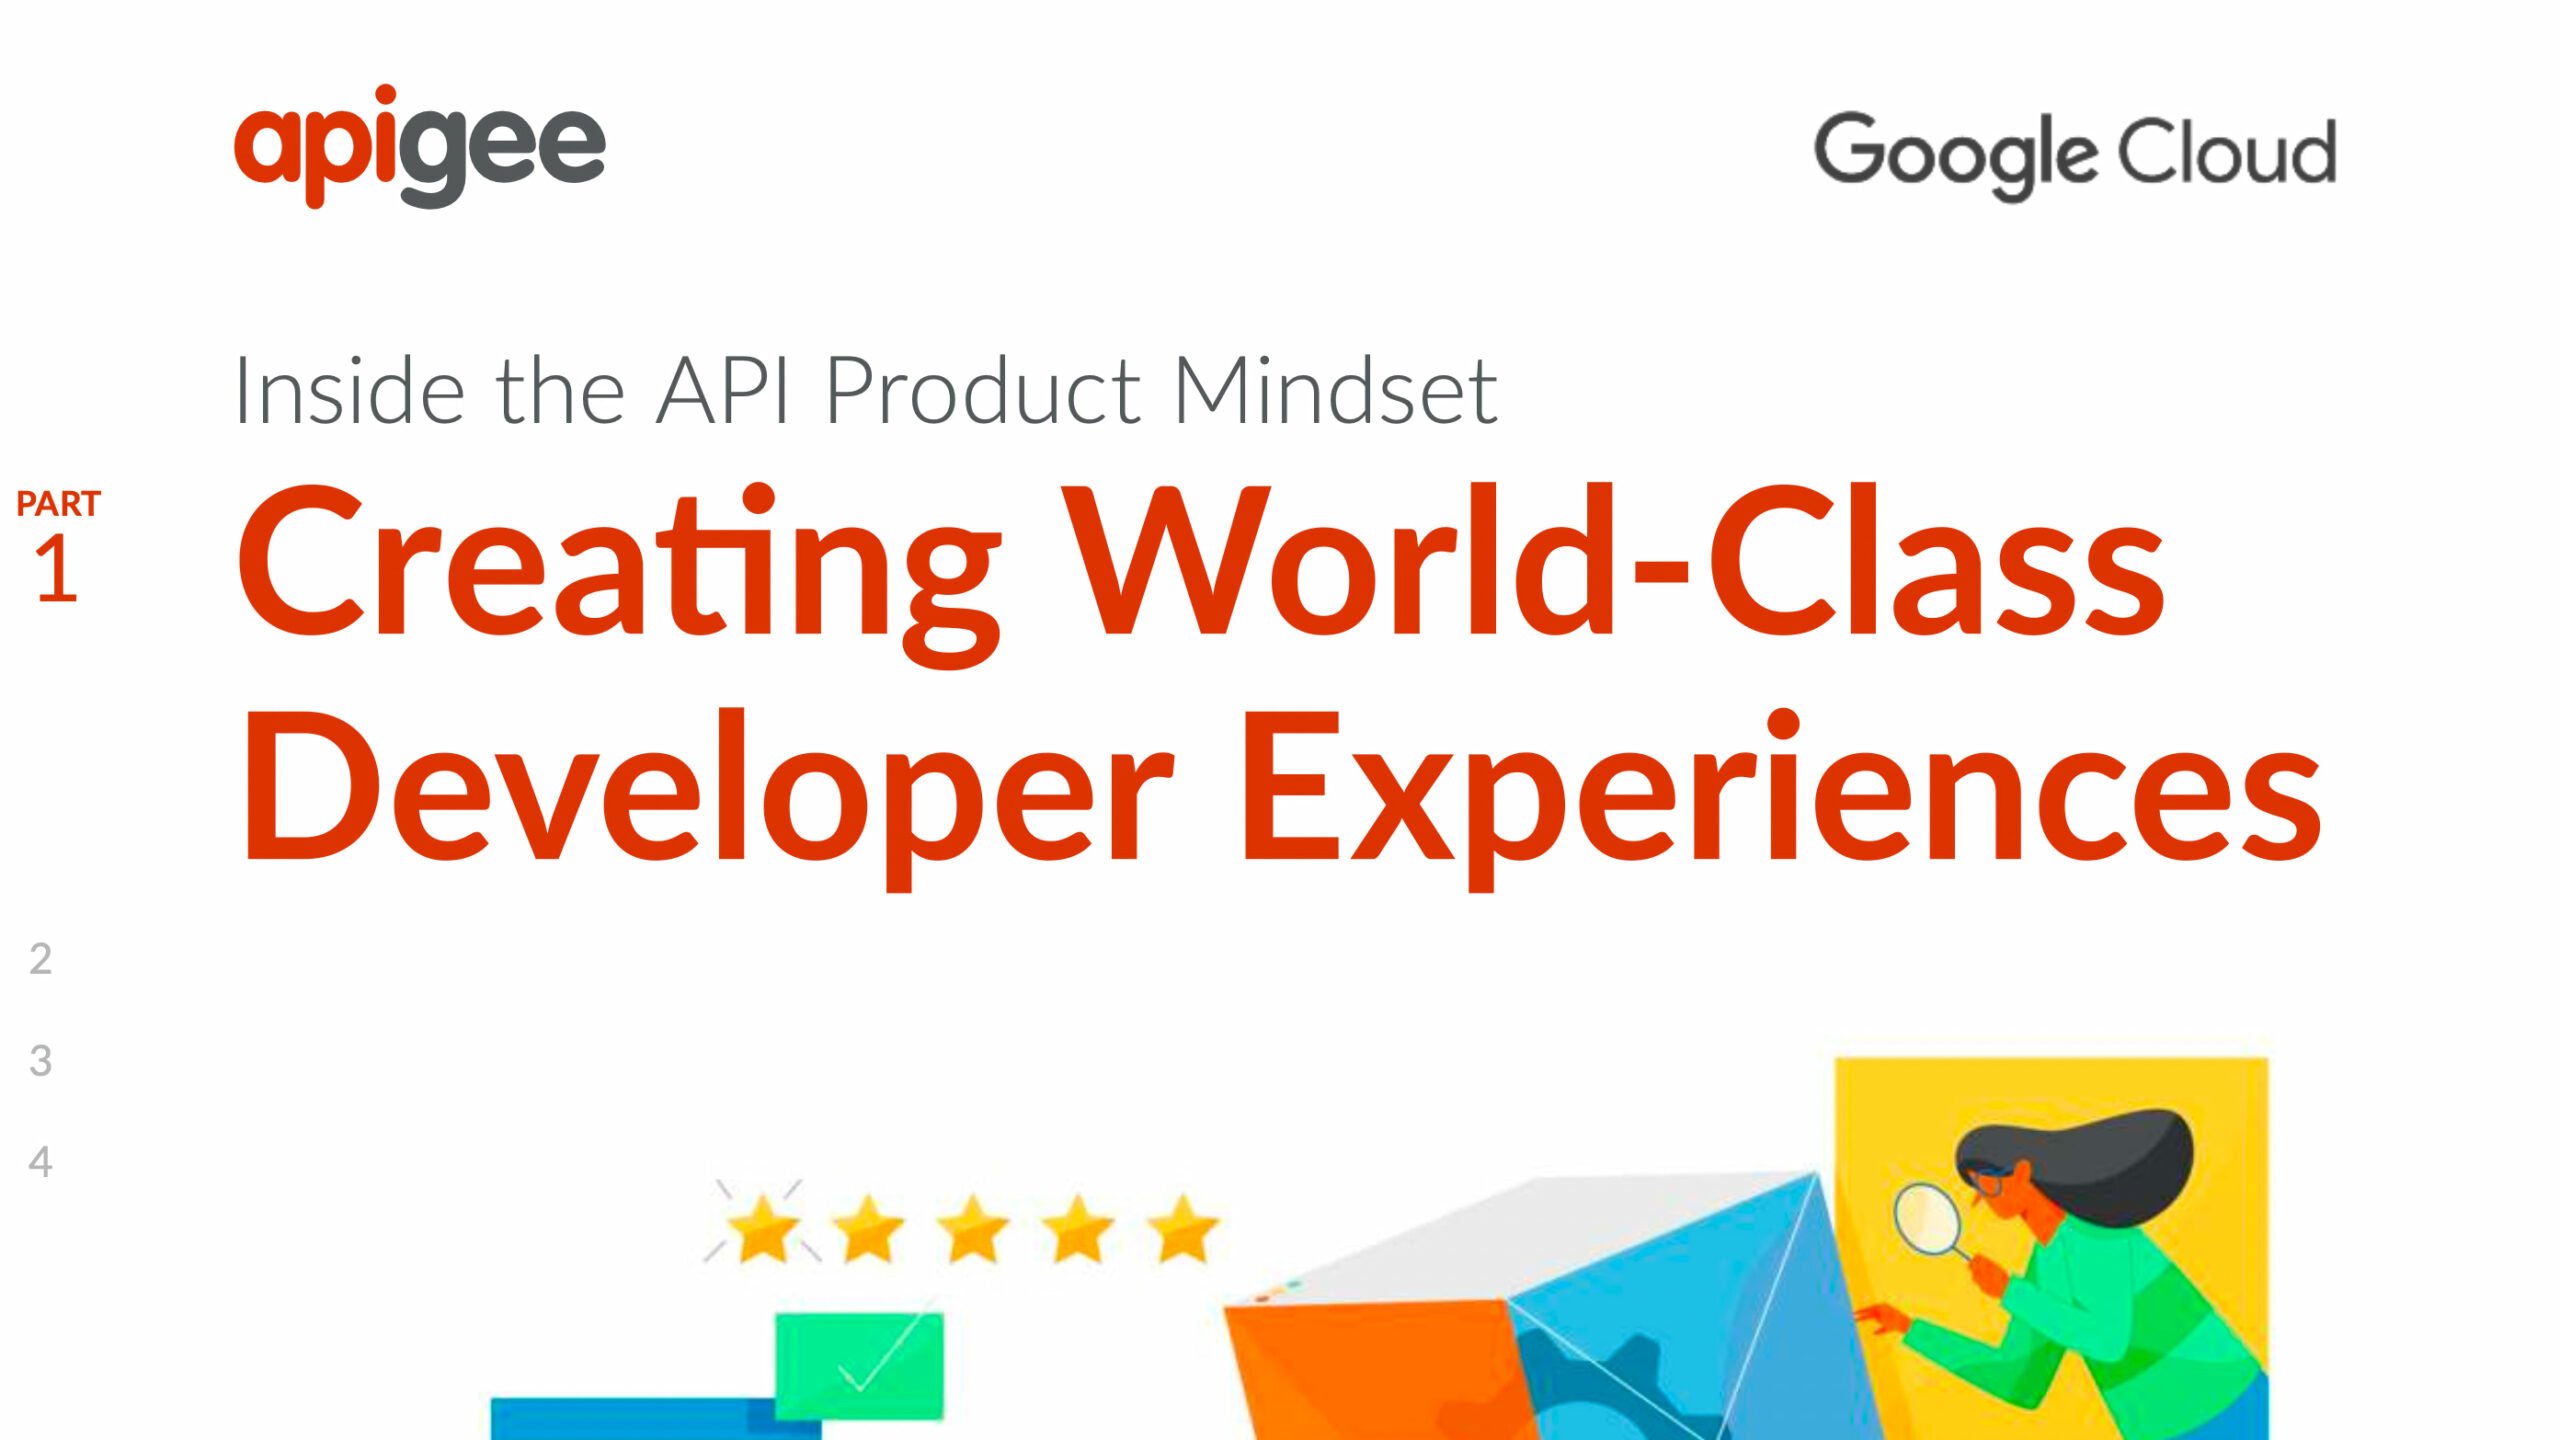 3. Creating World-Class Developer Experiences